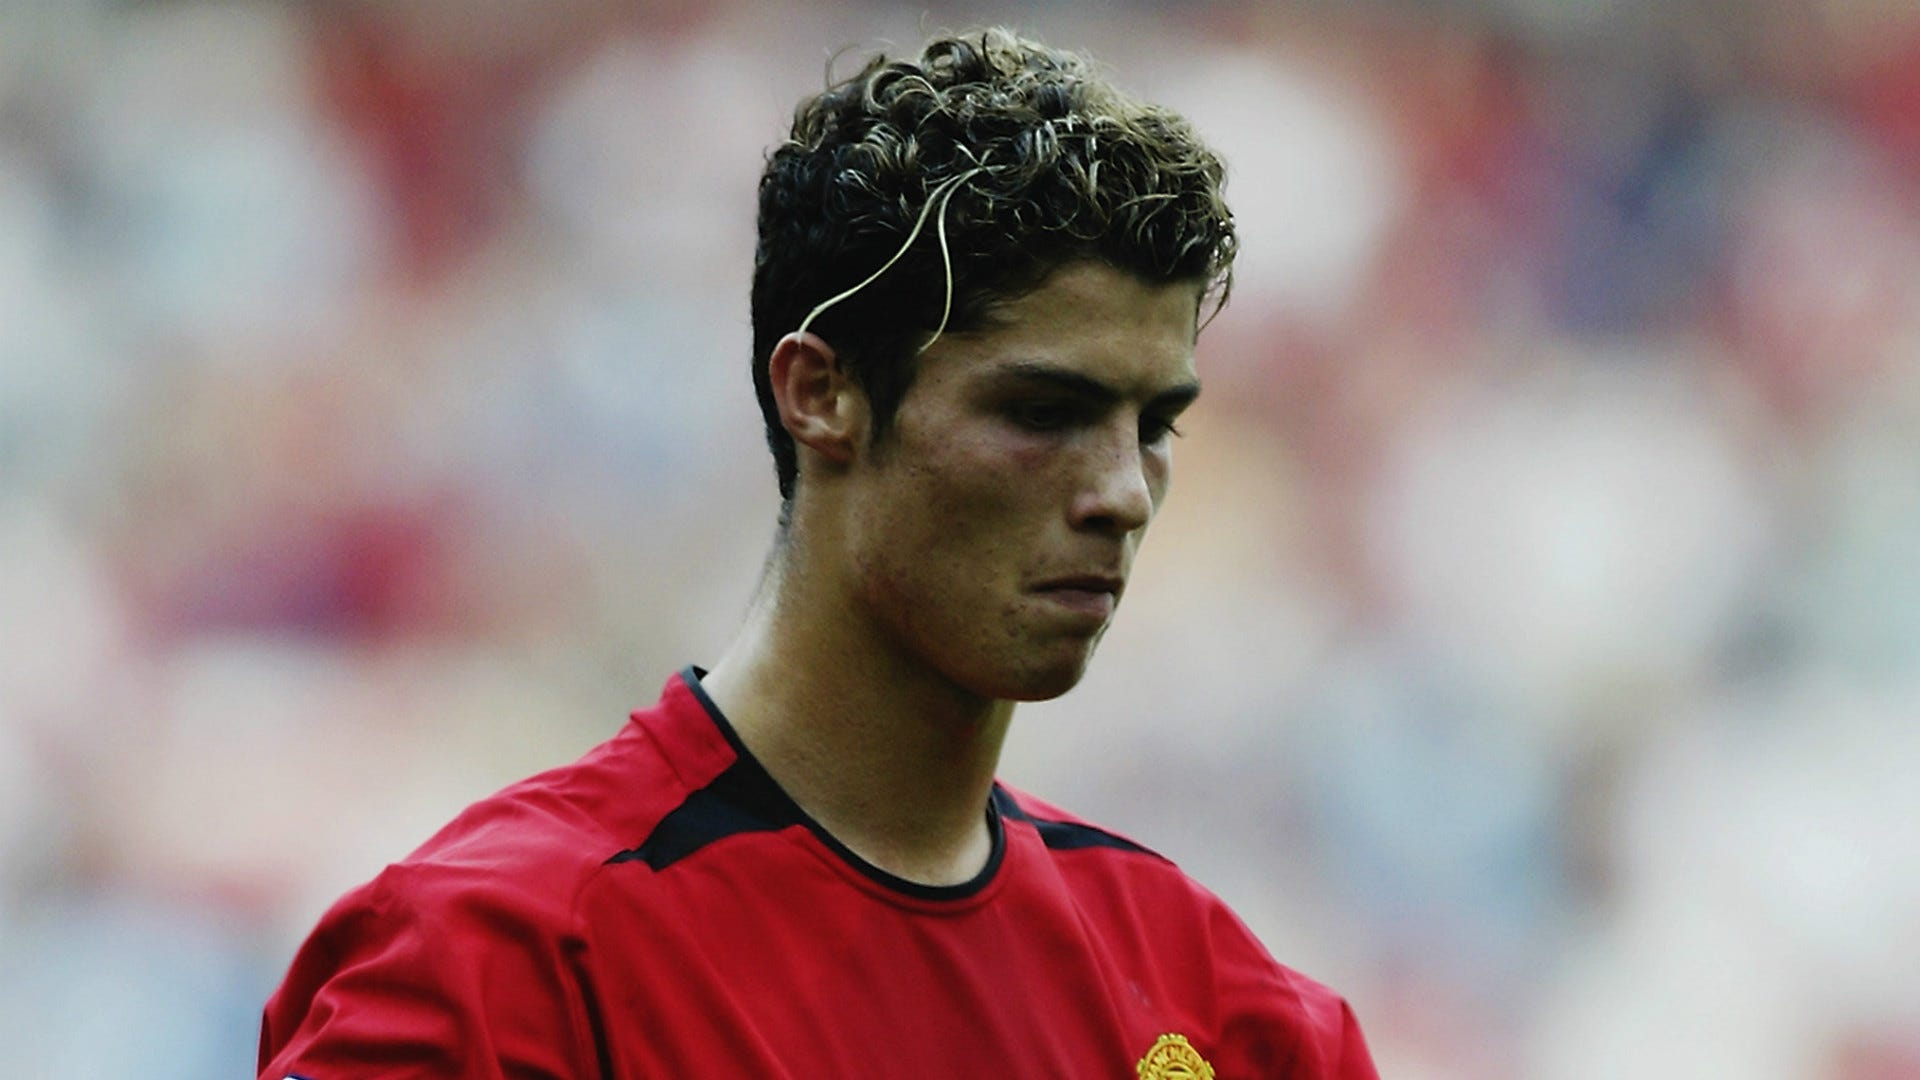 Cristiano Ronaldo's haircuts over the years